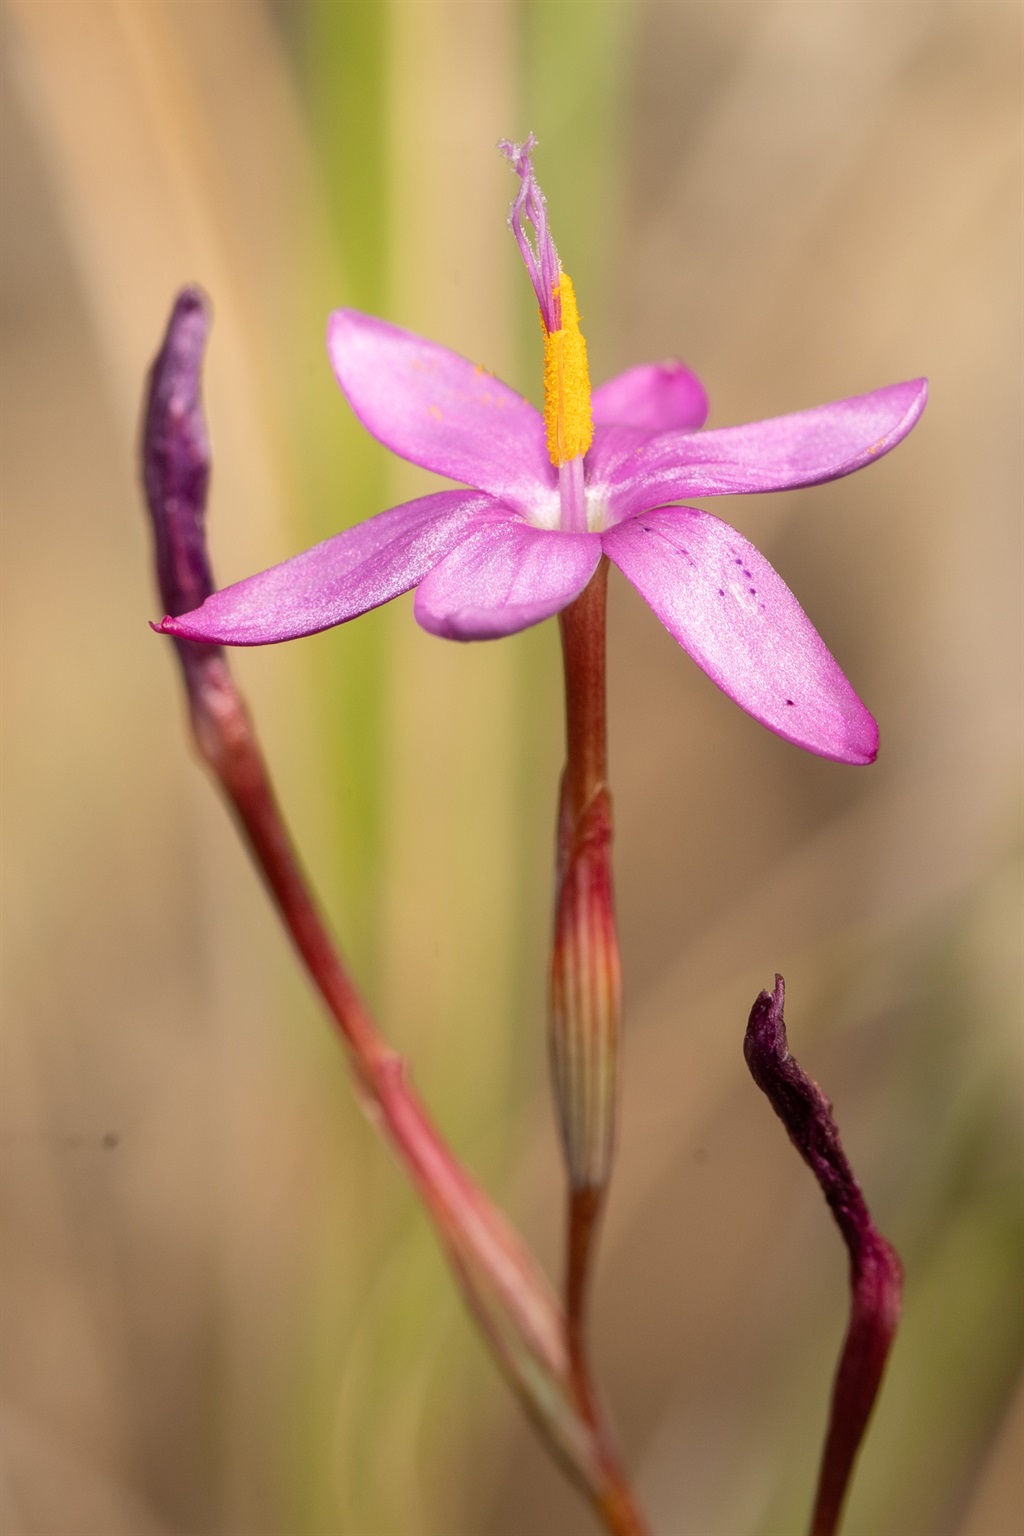 1.	The critically endangered pink iris, Hesperanth